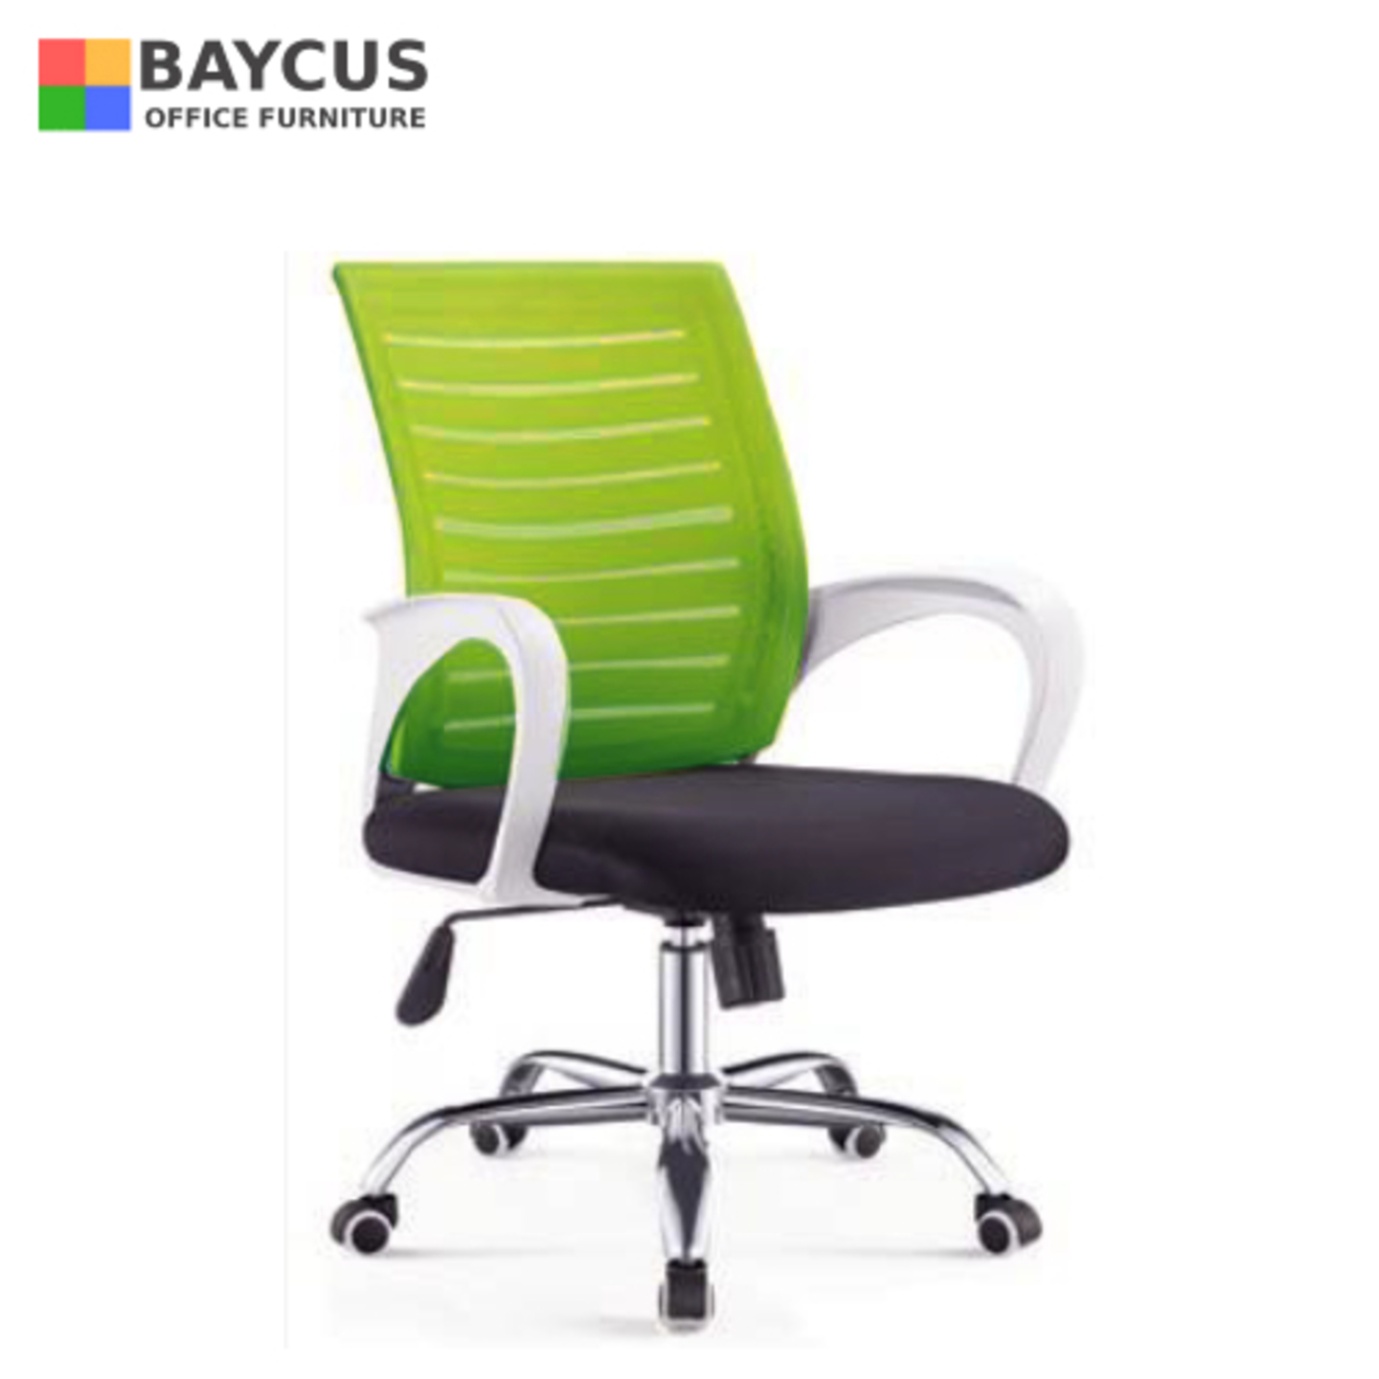 ergonimic office chair